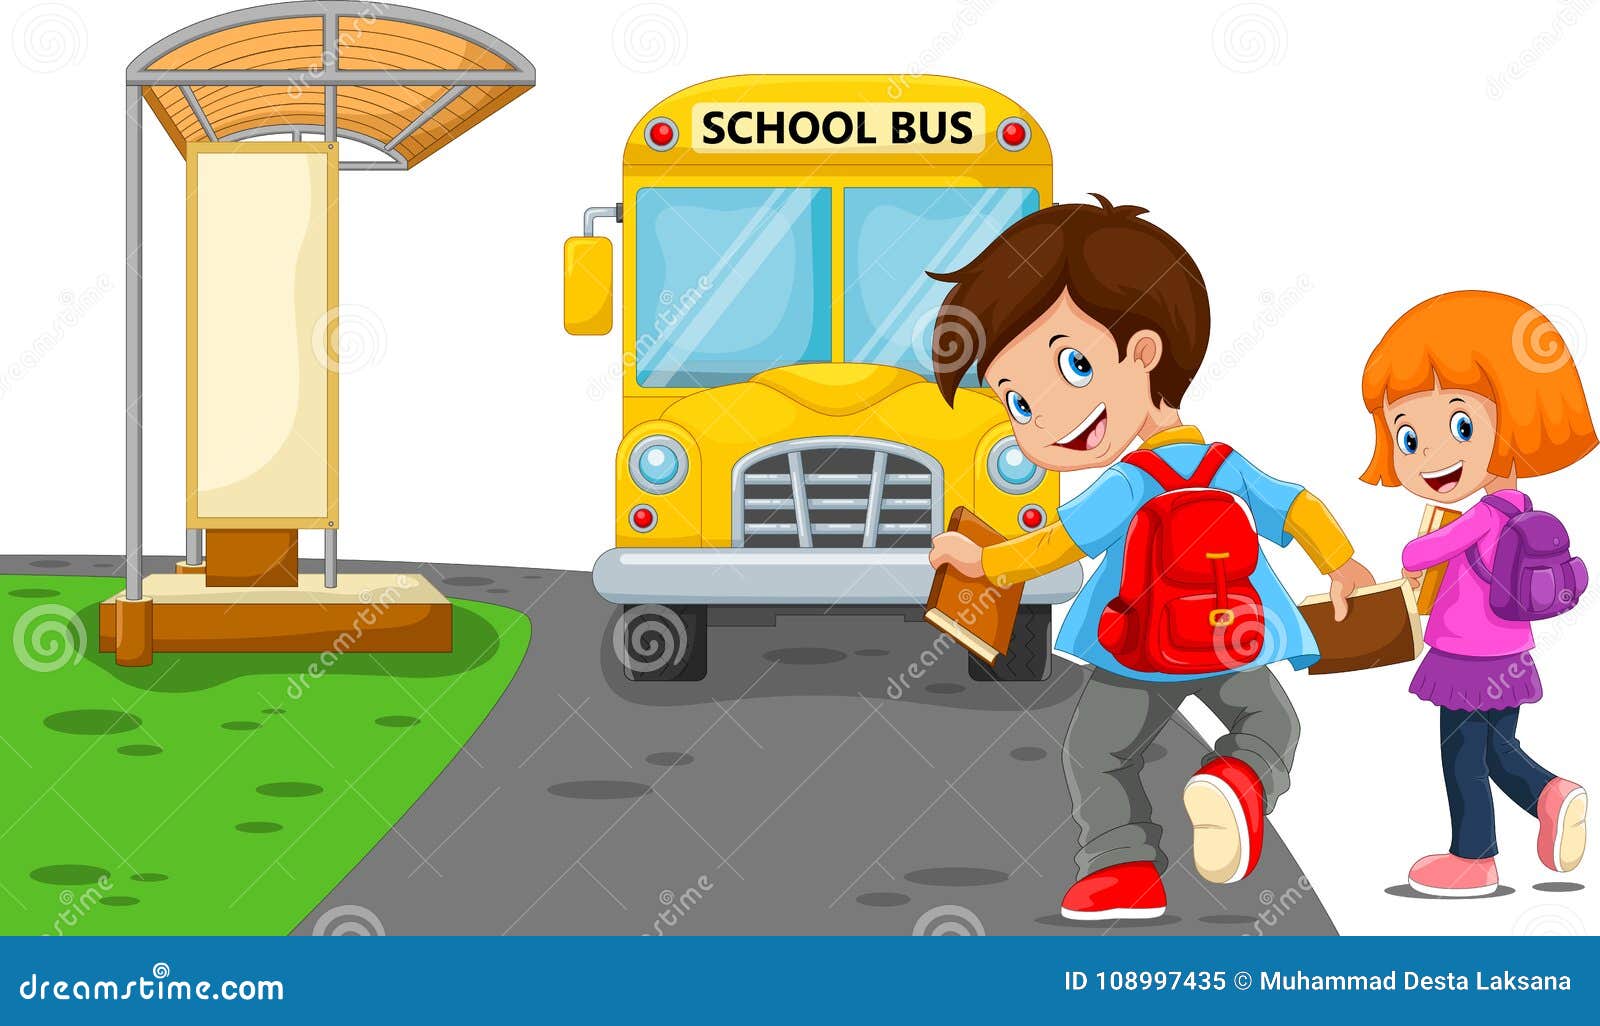 Back To School. Vector Illustration of Cartoon Kids Going To School with  School Bus Stock Illustration - Illustration of sign, group: 108997435